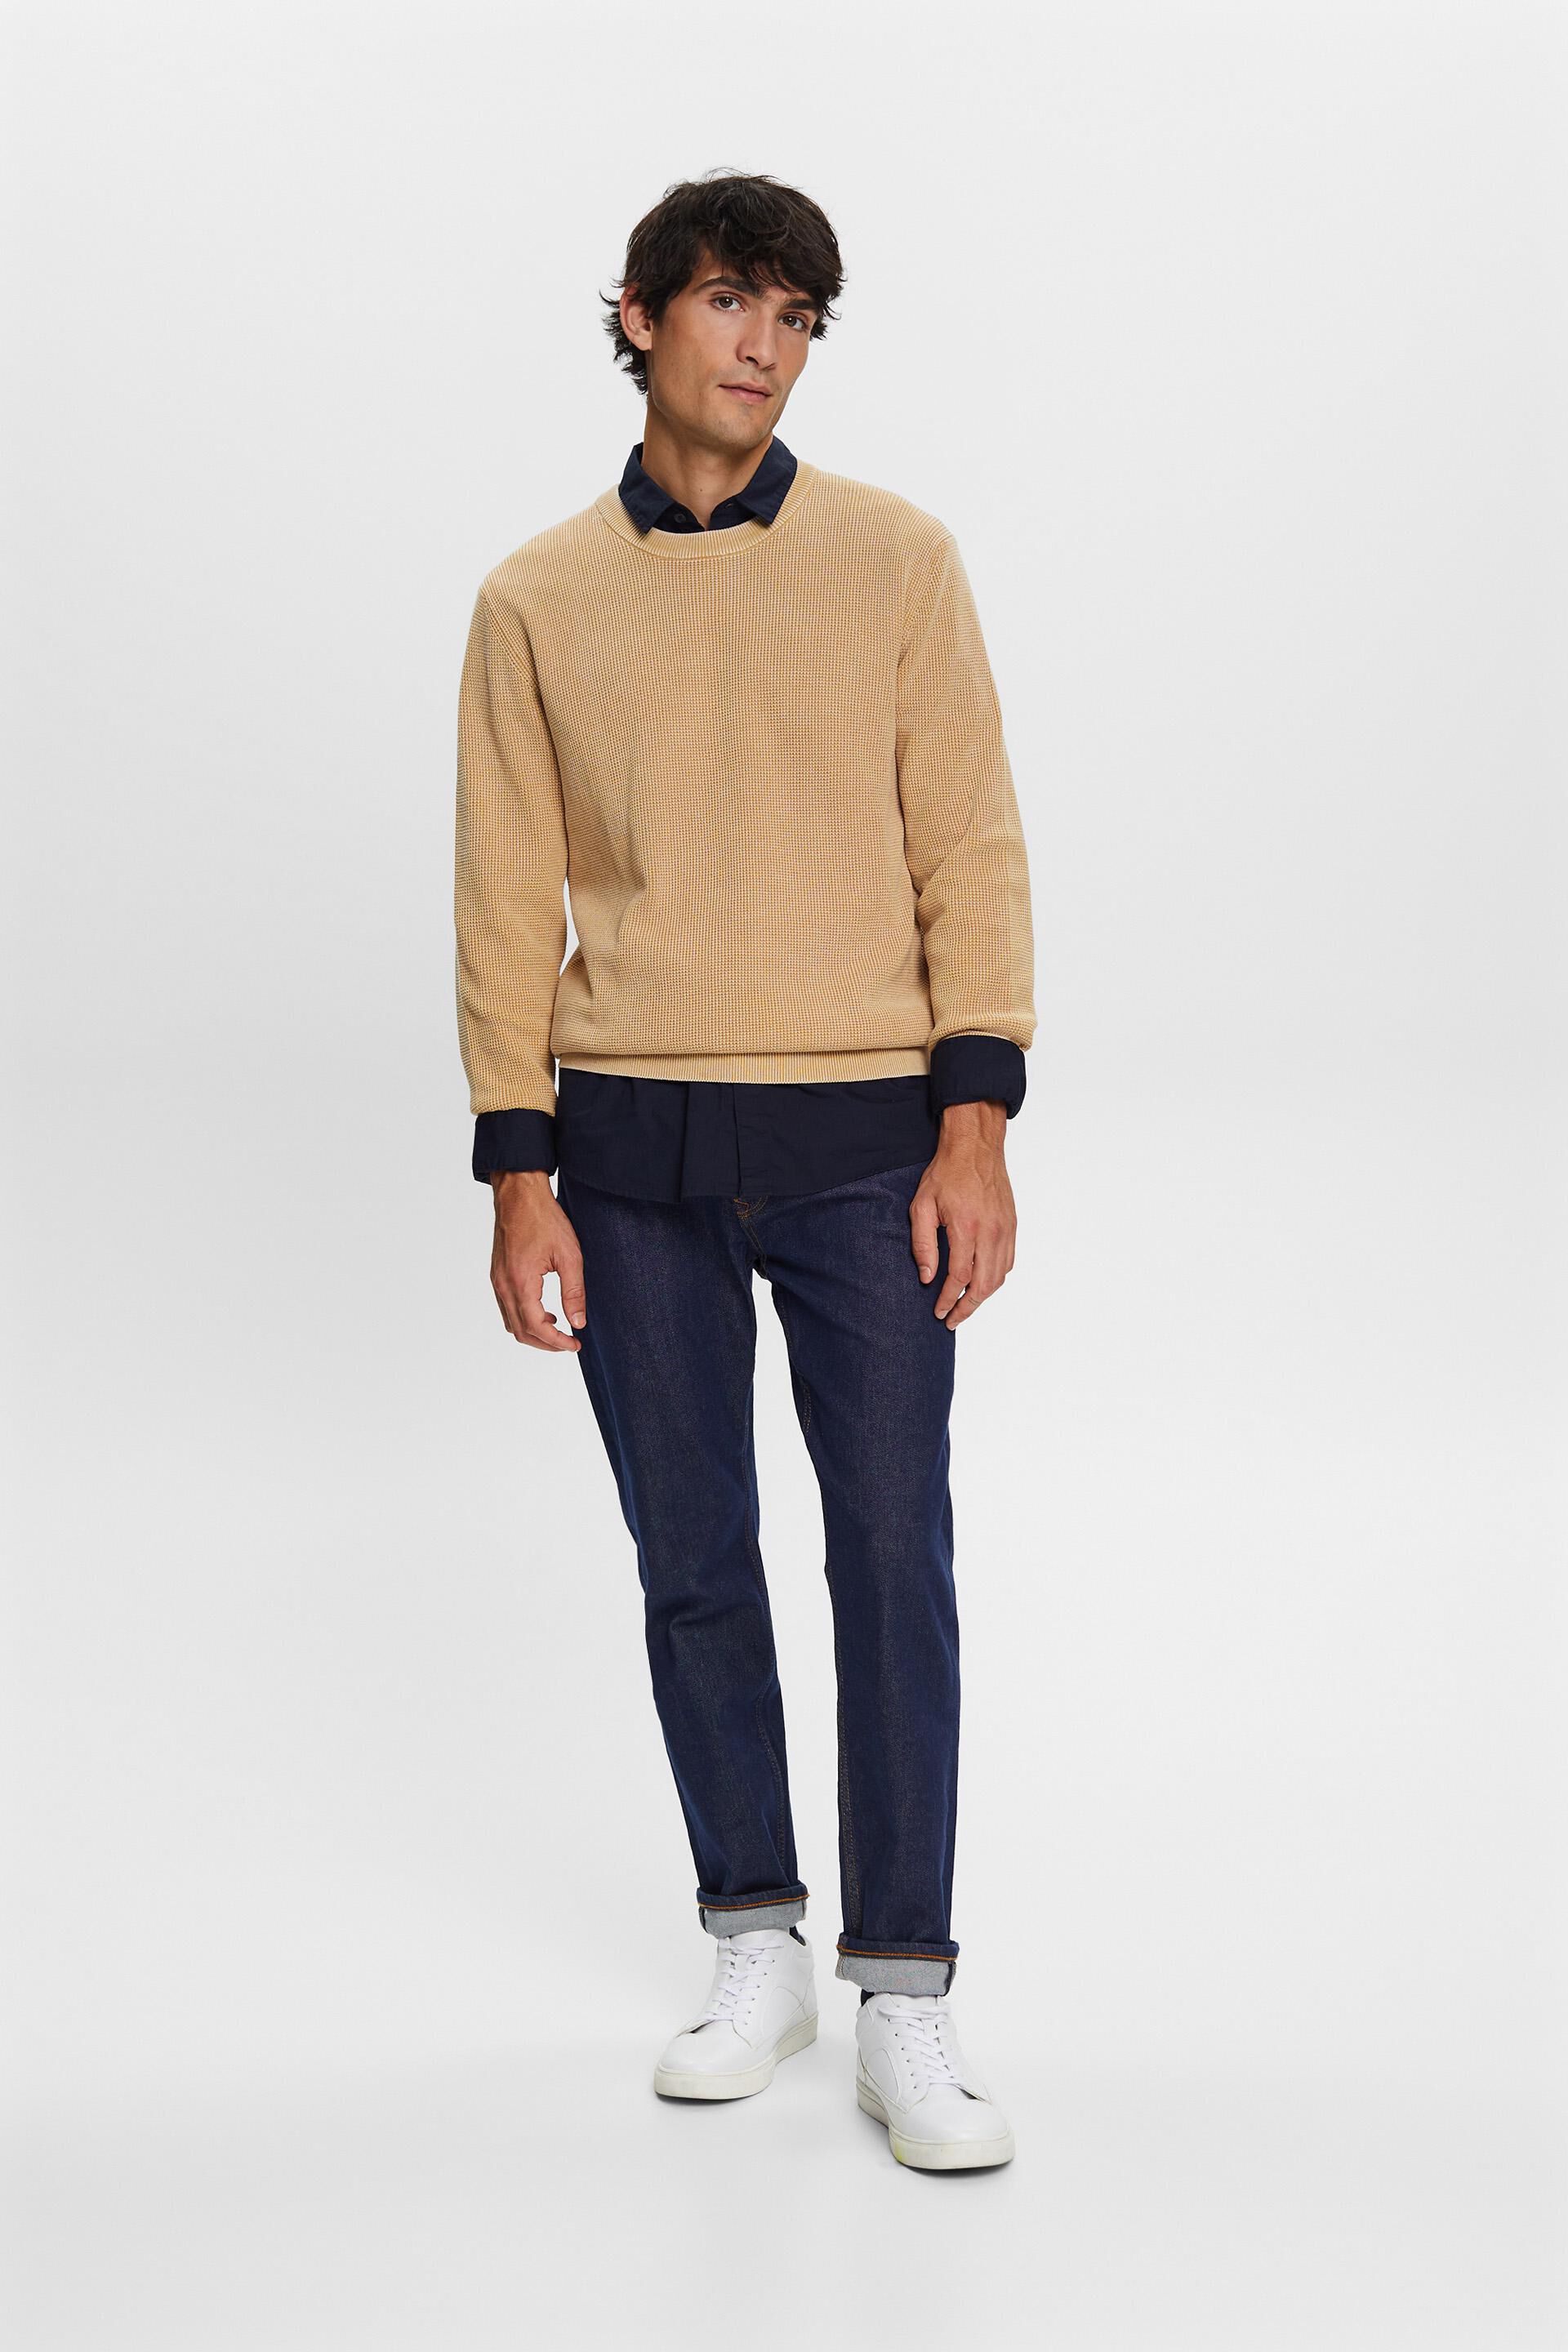 Esprit Basic crewneck jumper, 100% cotton